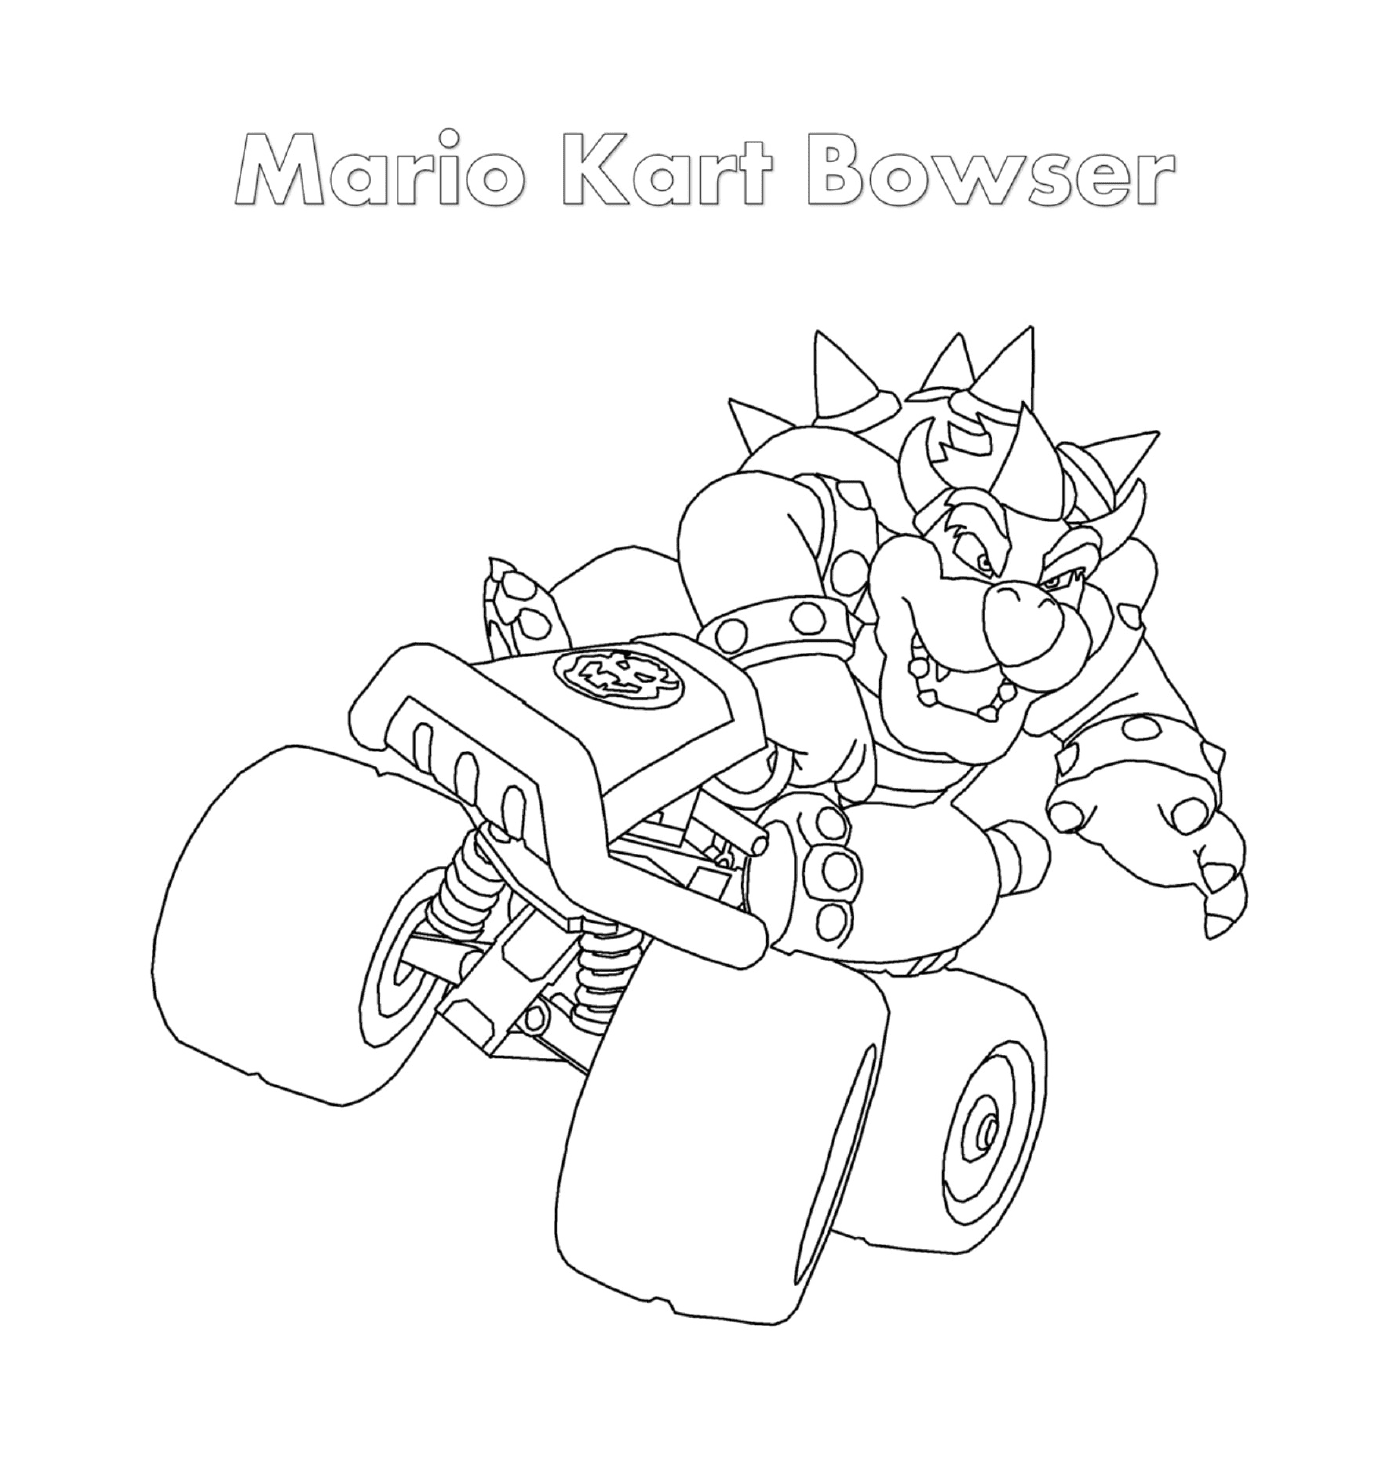 Bowser Mario Kart Nintendo